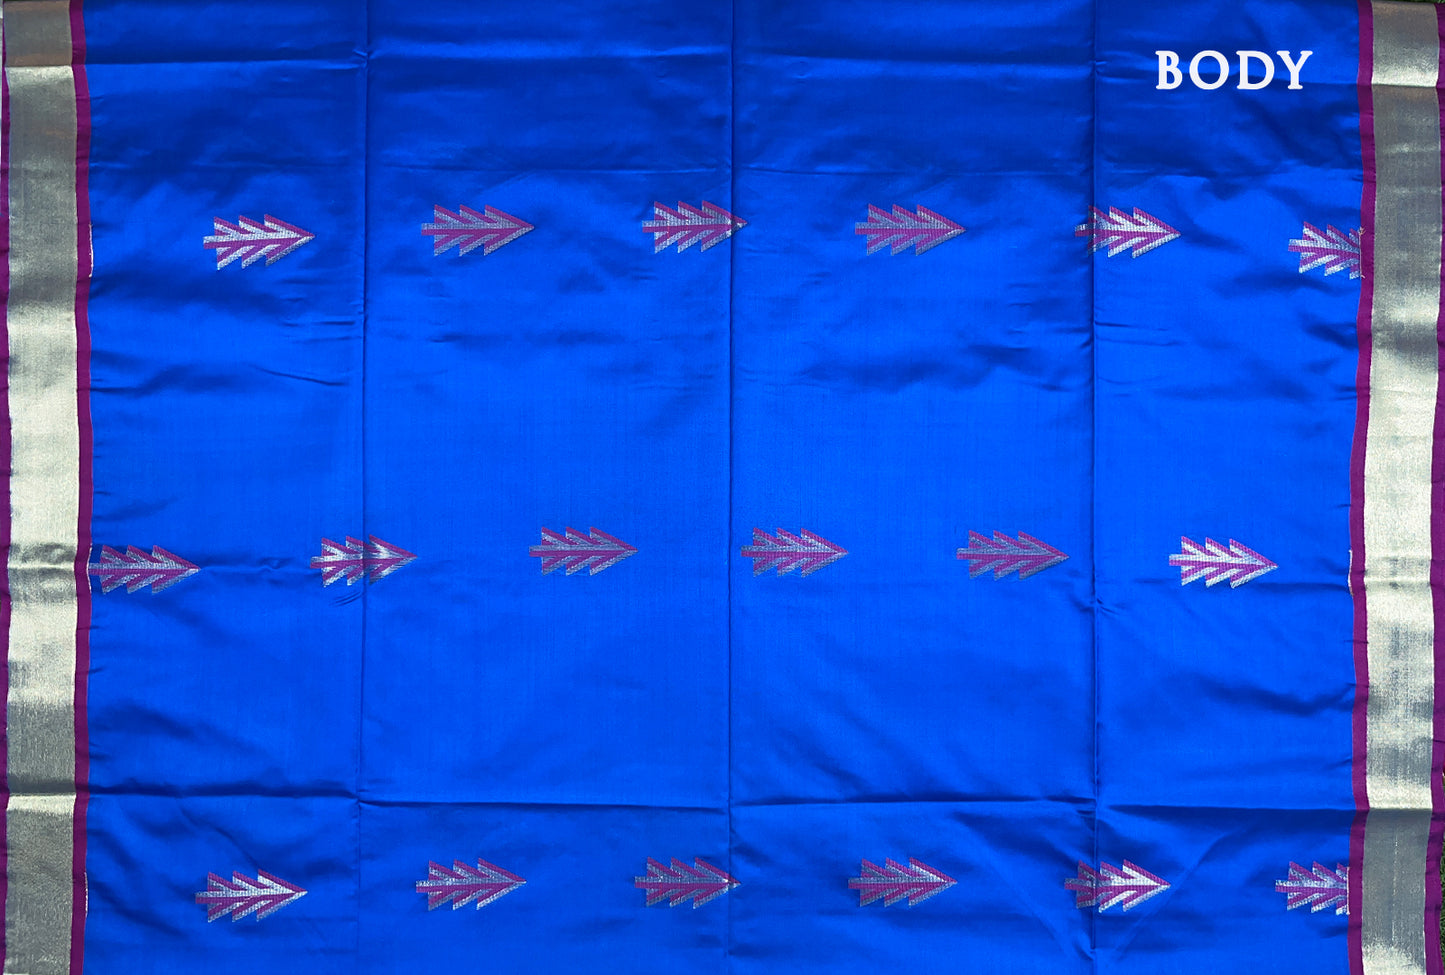 Blue with Rani Pink Kanchipuram semi soft silk saree